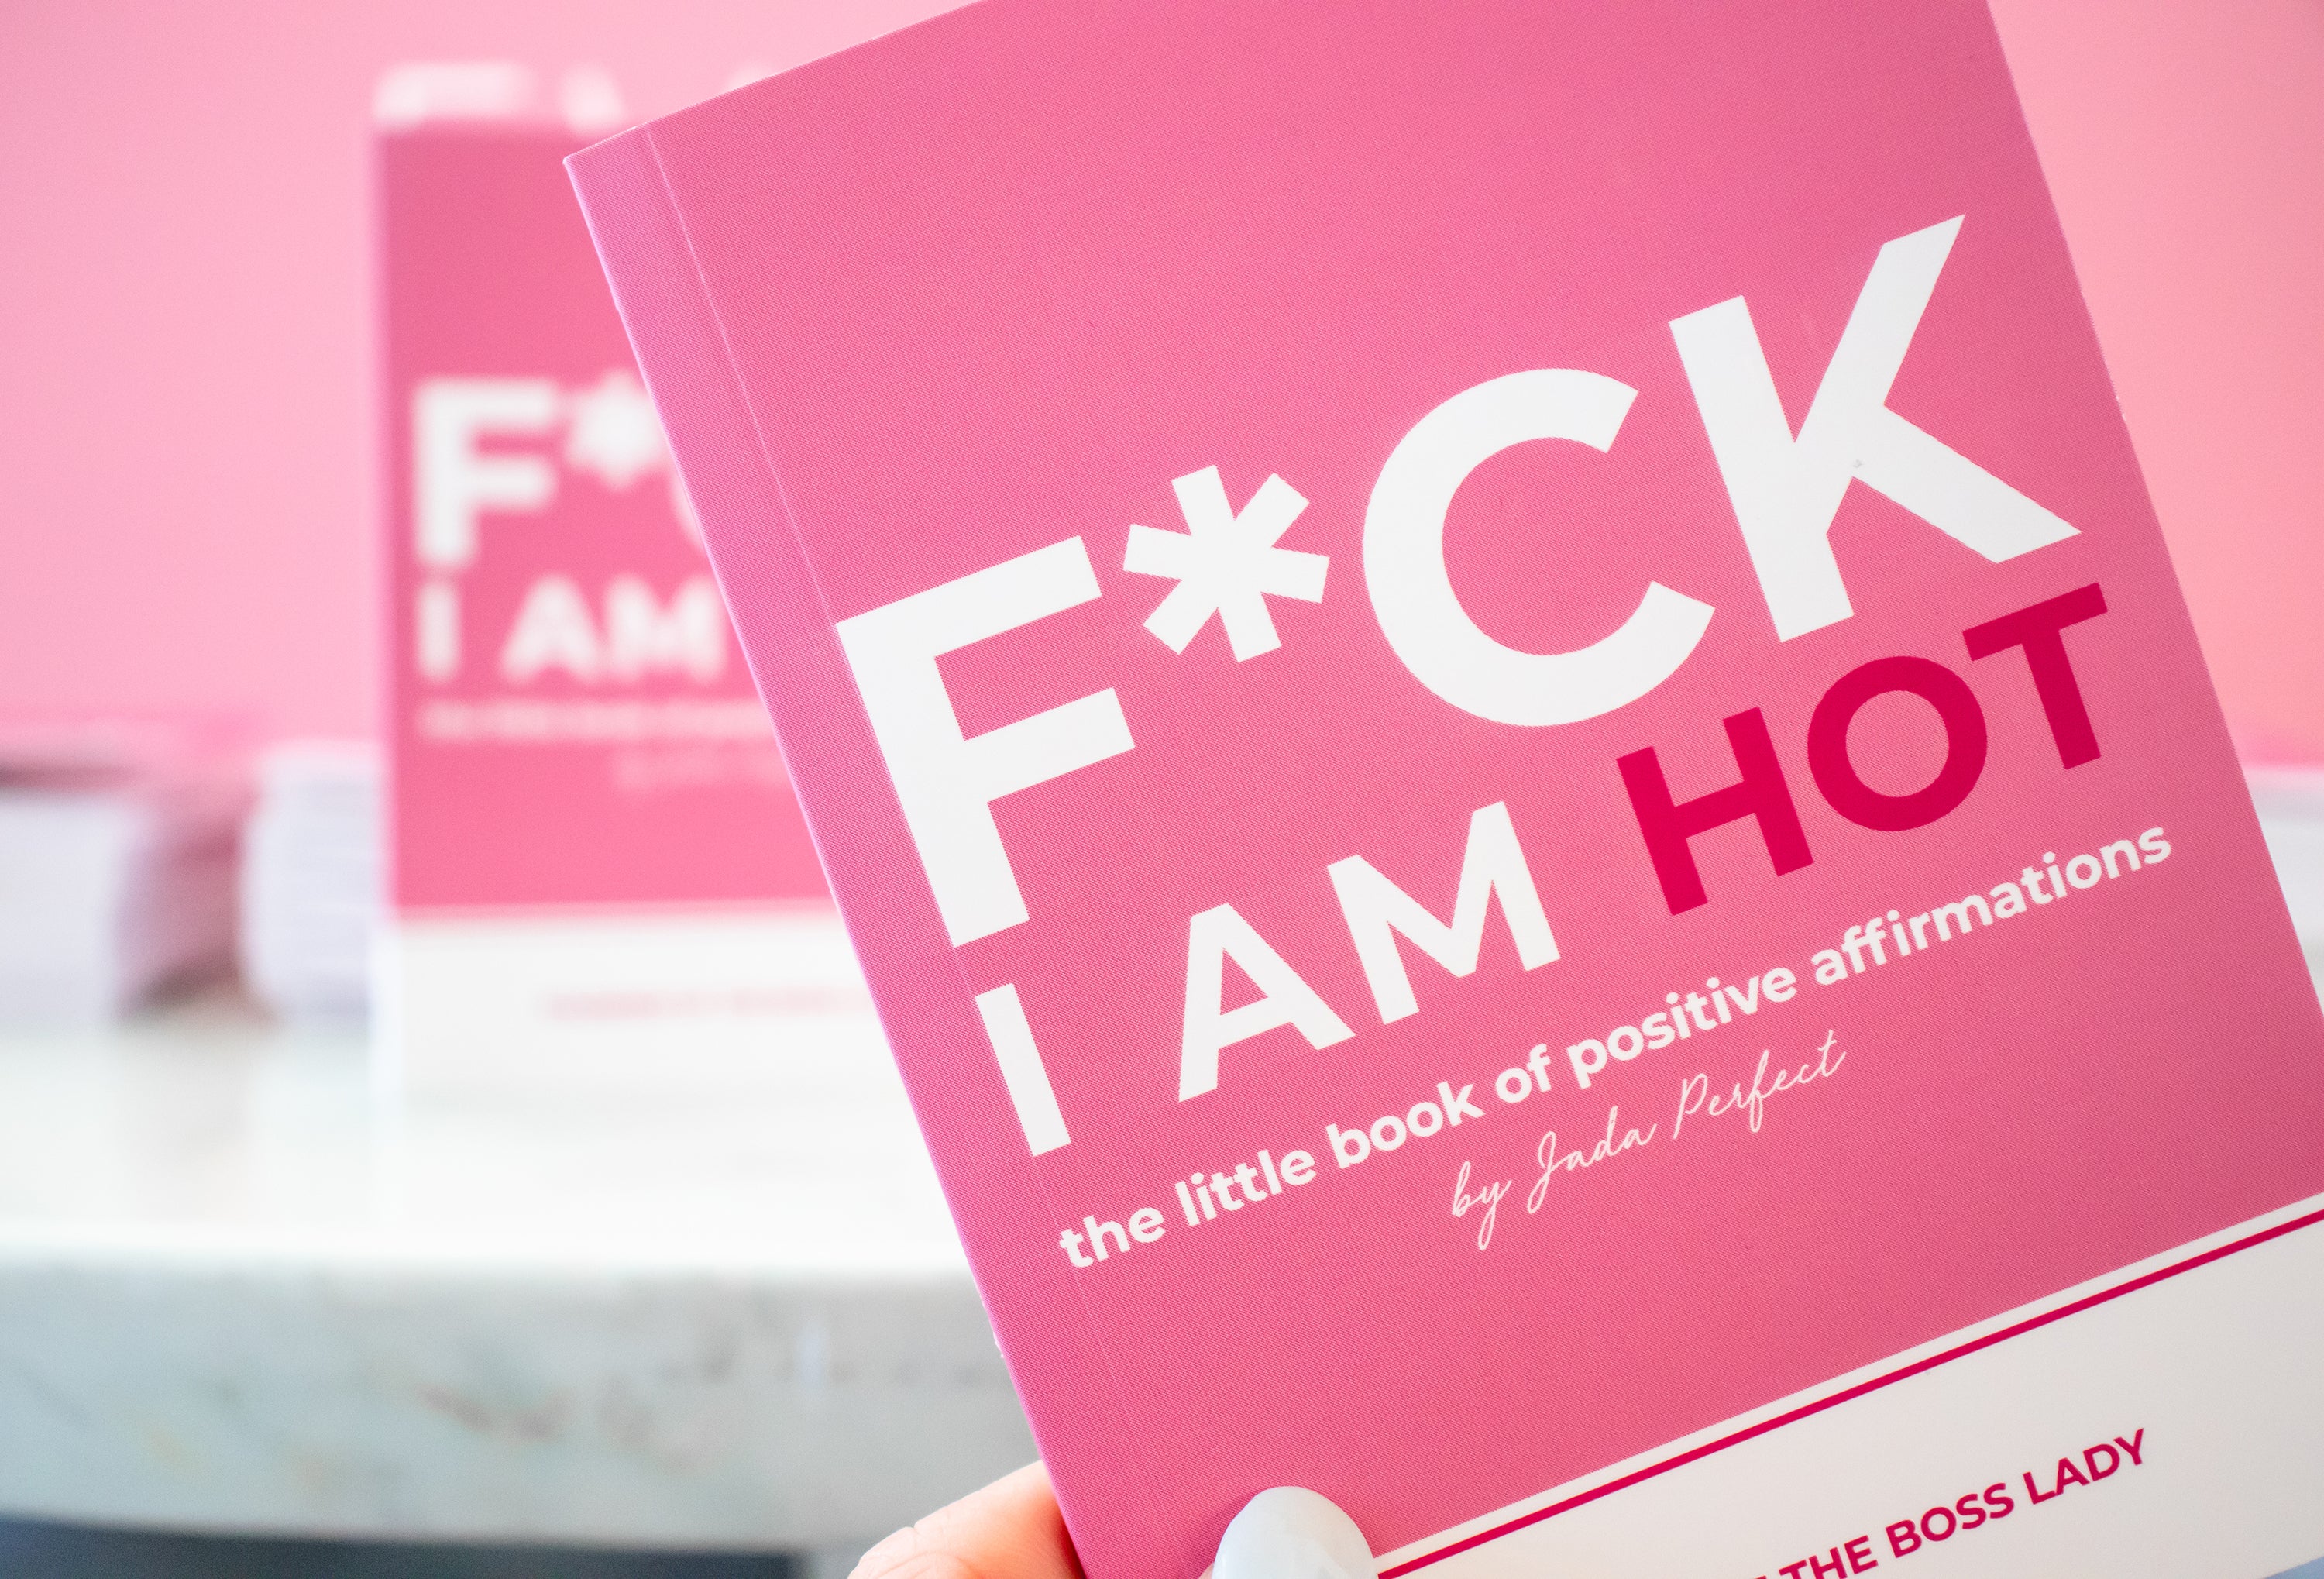 F*CK I AM HOT - Affirmation Book